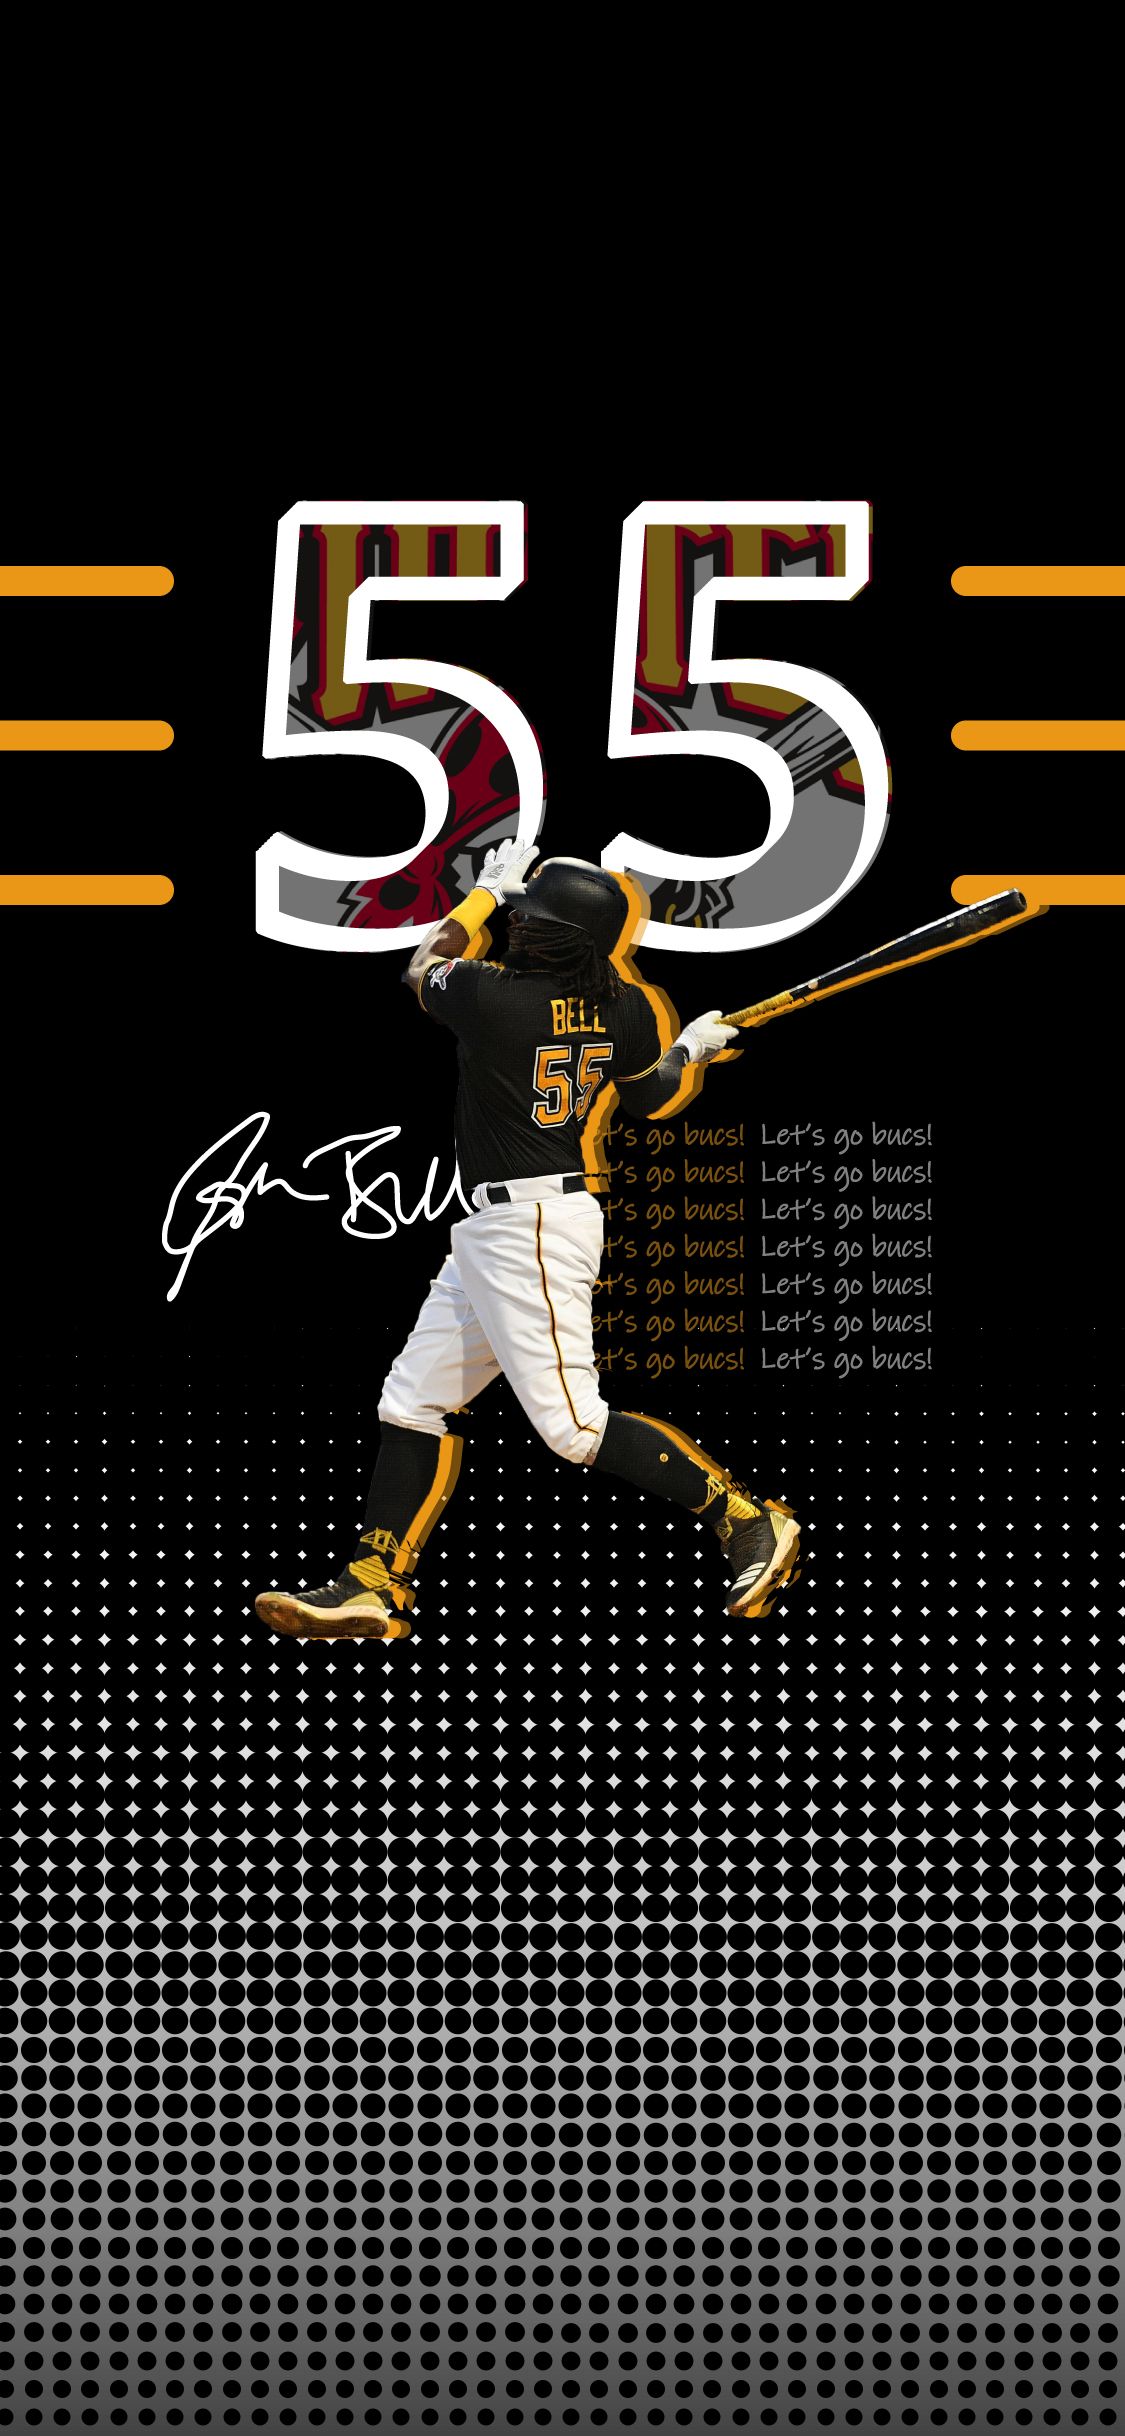 Wallpaper wallpaper, sport, logo, baseball, Pittsburgh Pirates images for  desktop, section спорт - download